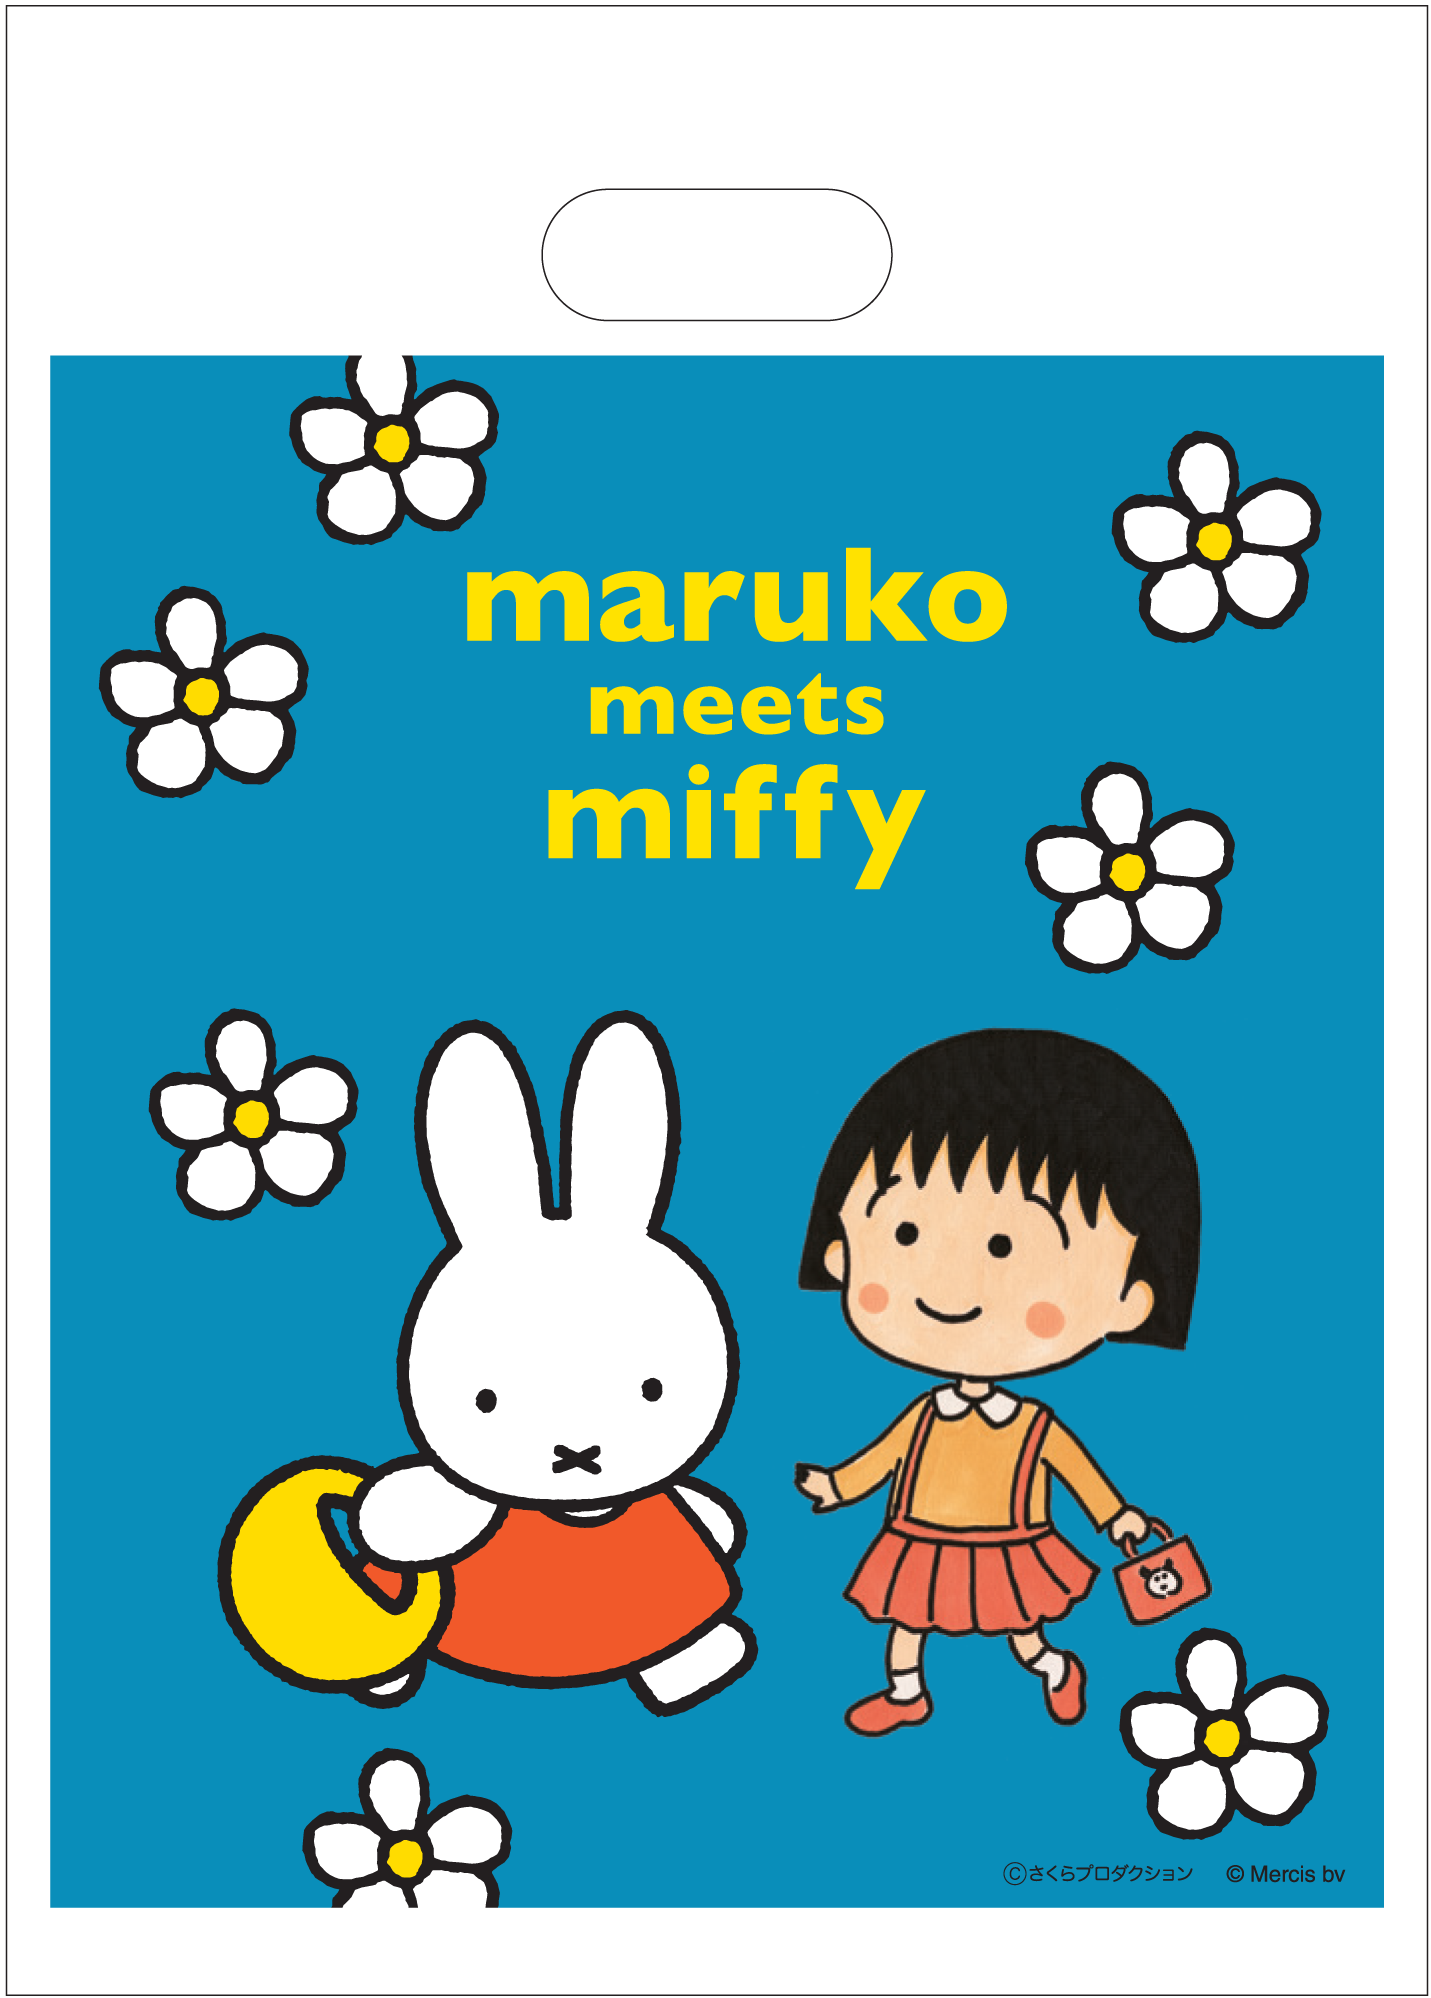 maruko meets miffy